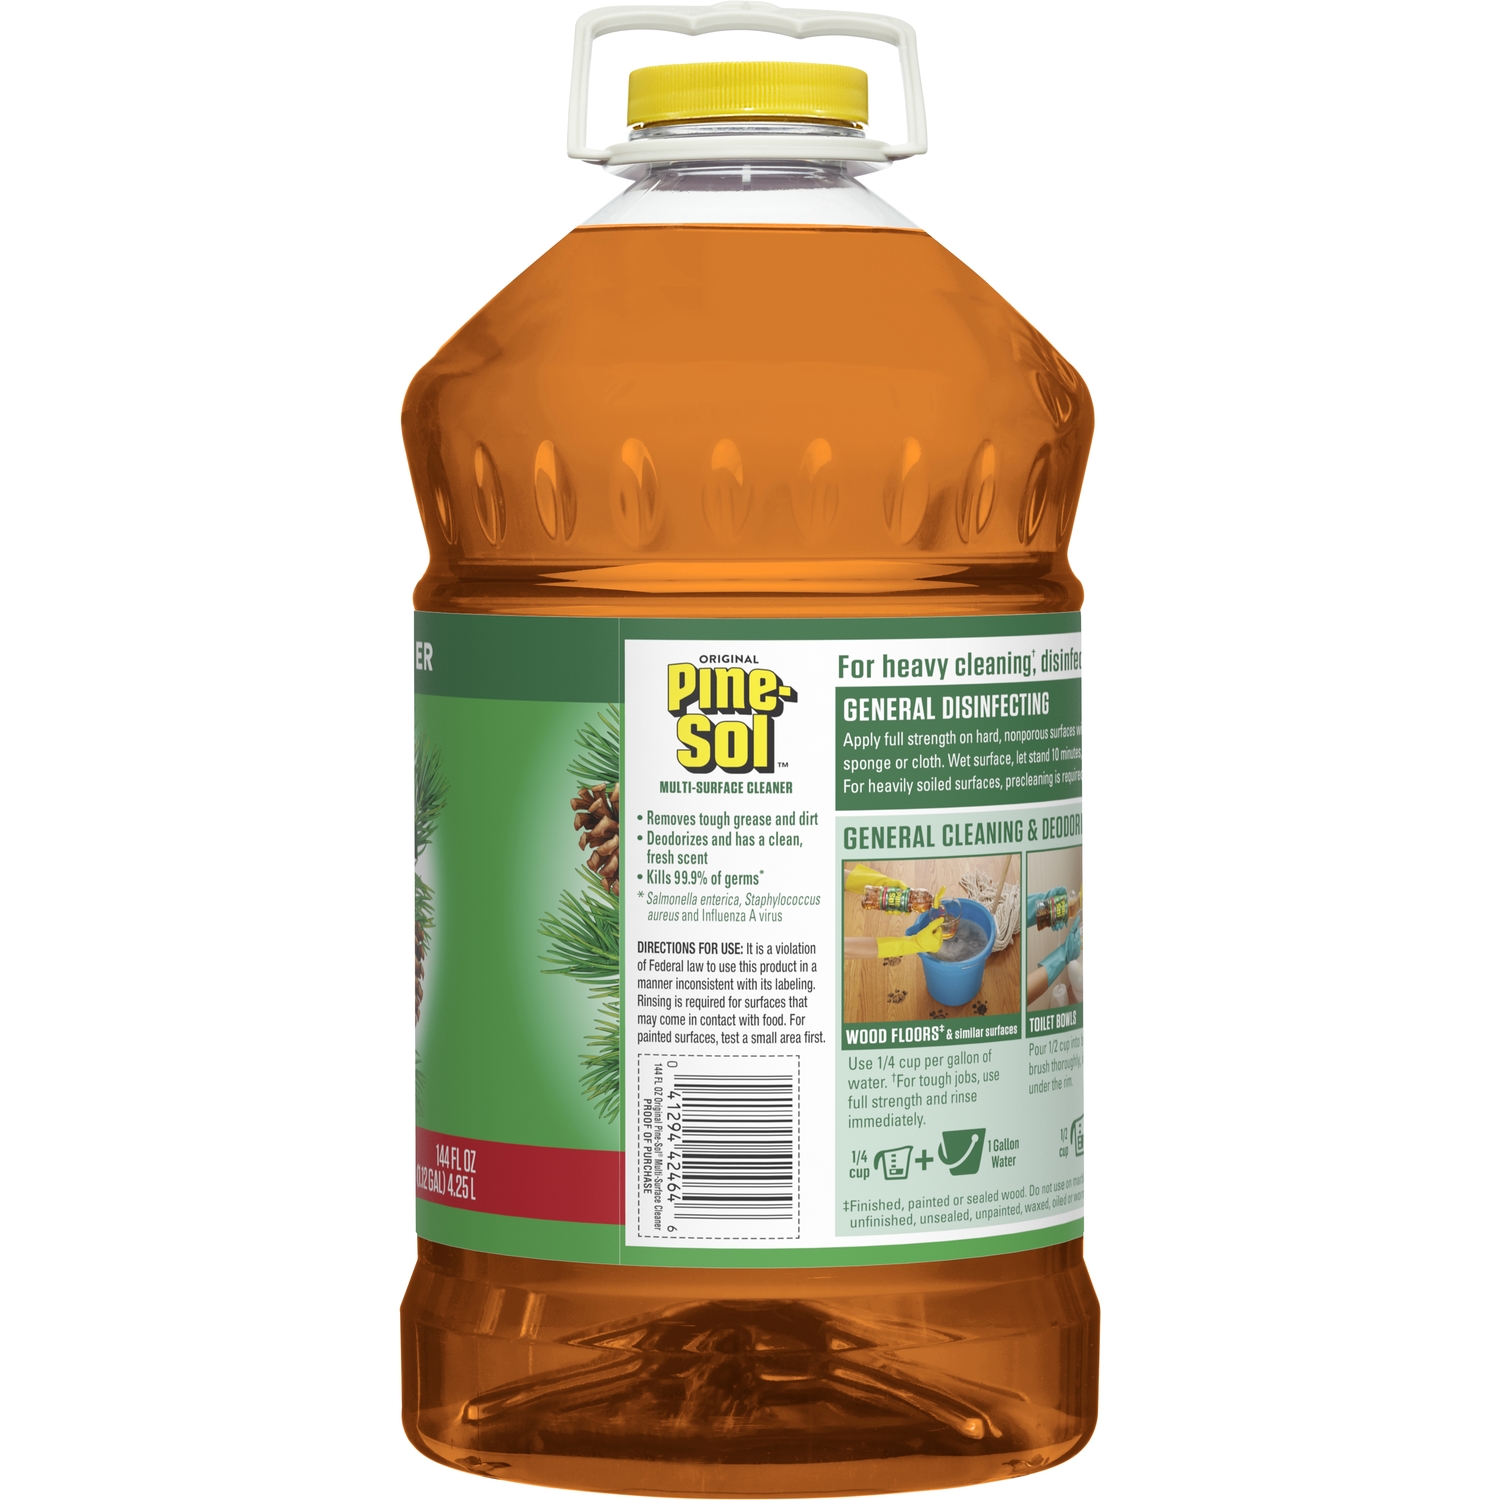 Pine-Sol Fresh Scent Multi-Surface Cleaner Liquid 144 oz